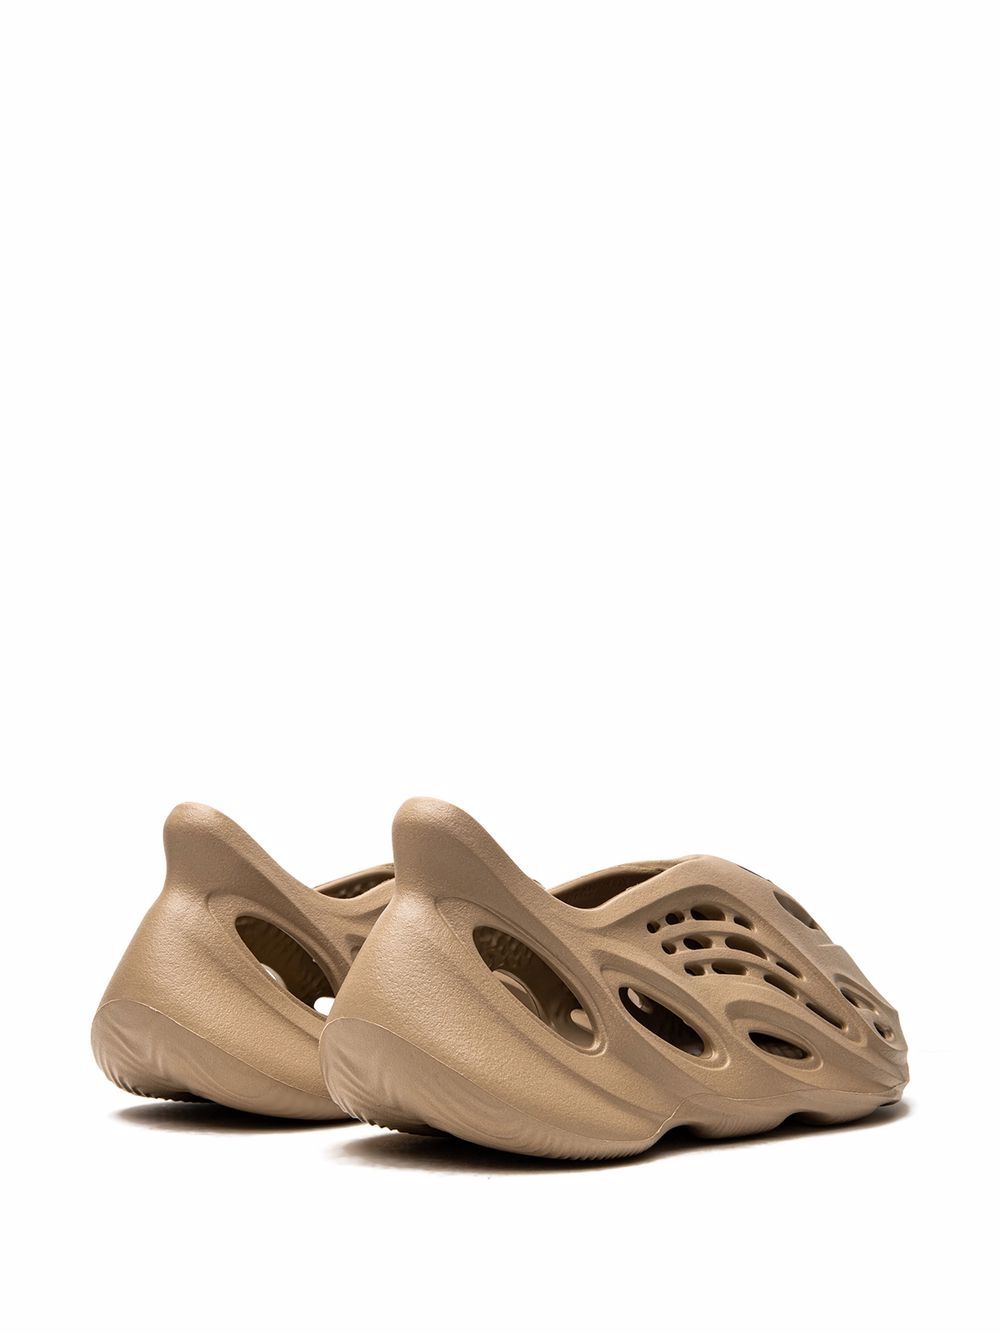 Adidas Yeezy Foam Runner "Mist" sneakers